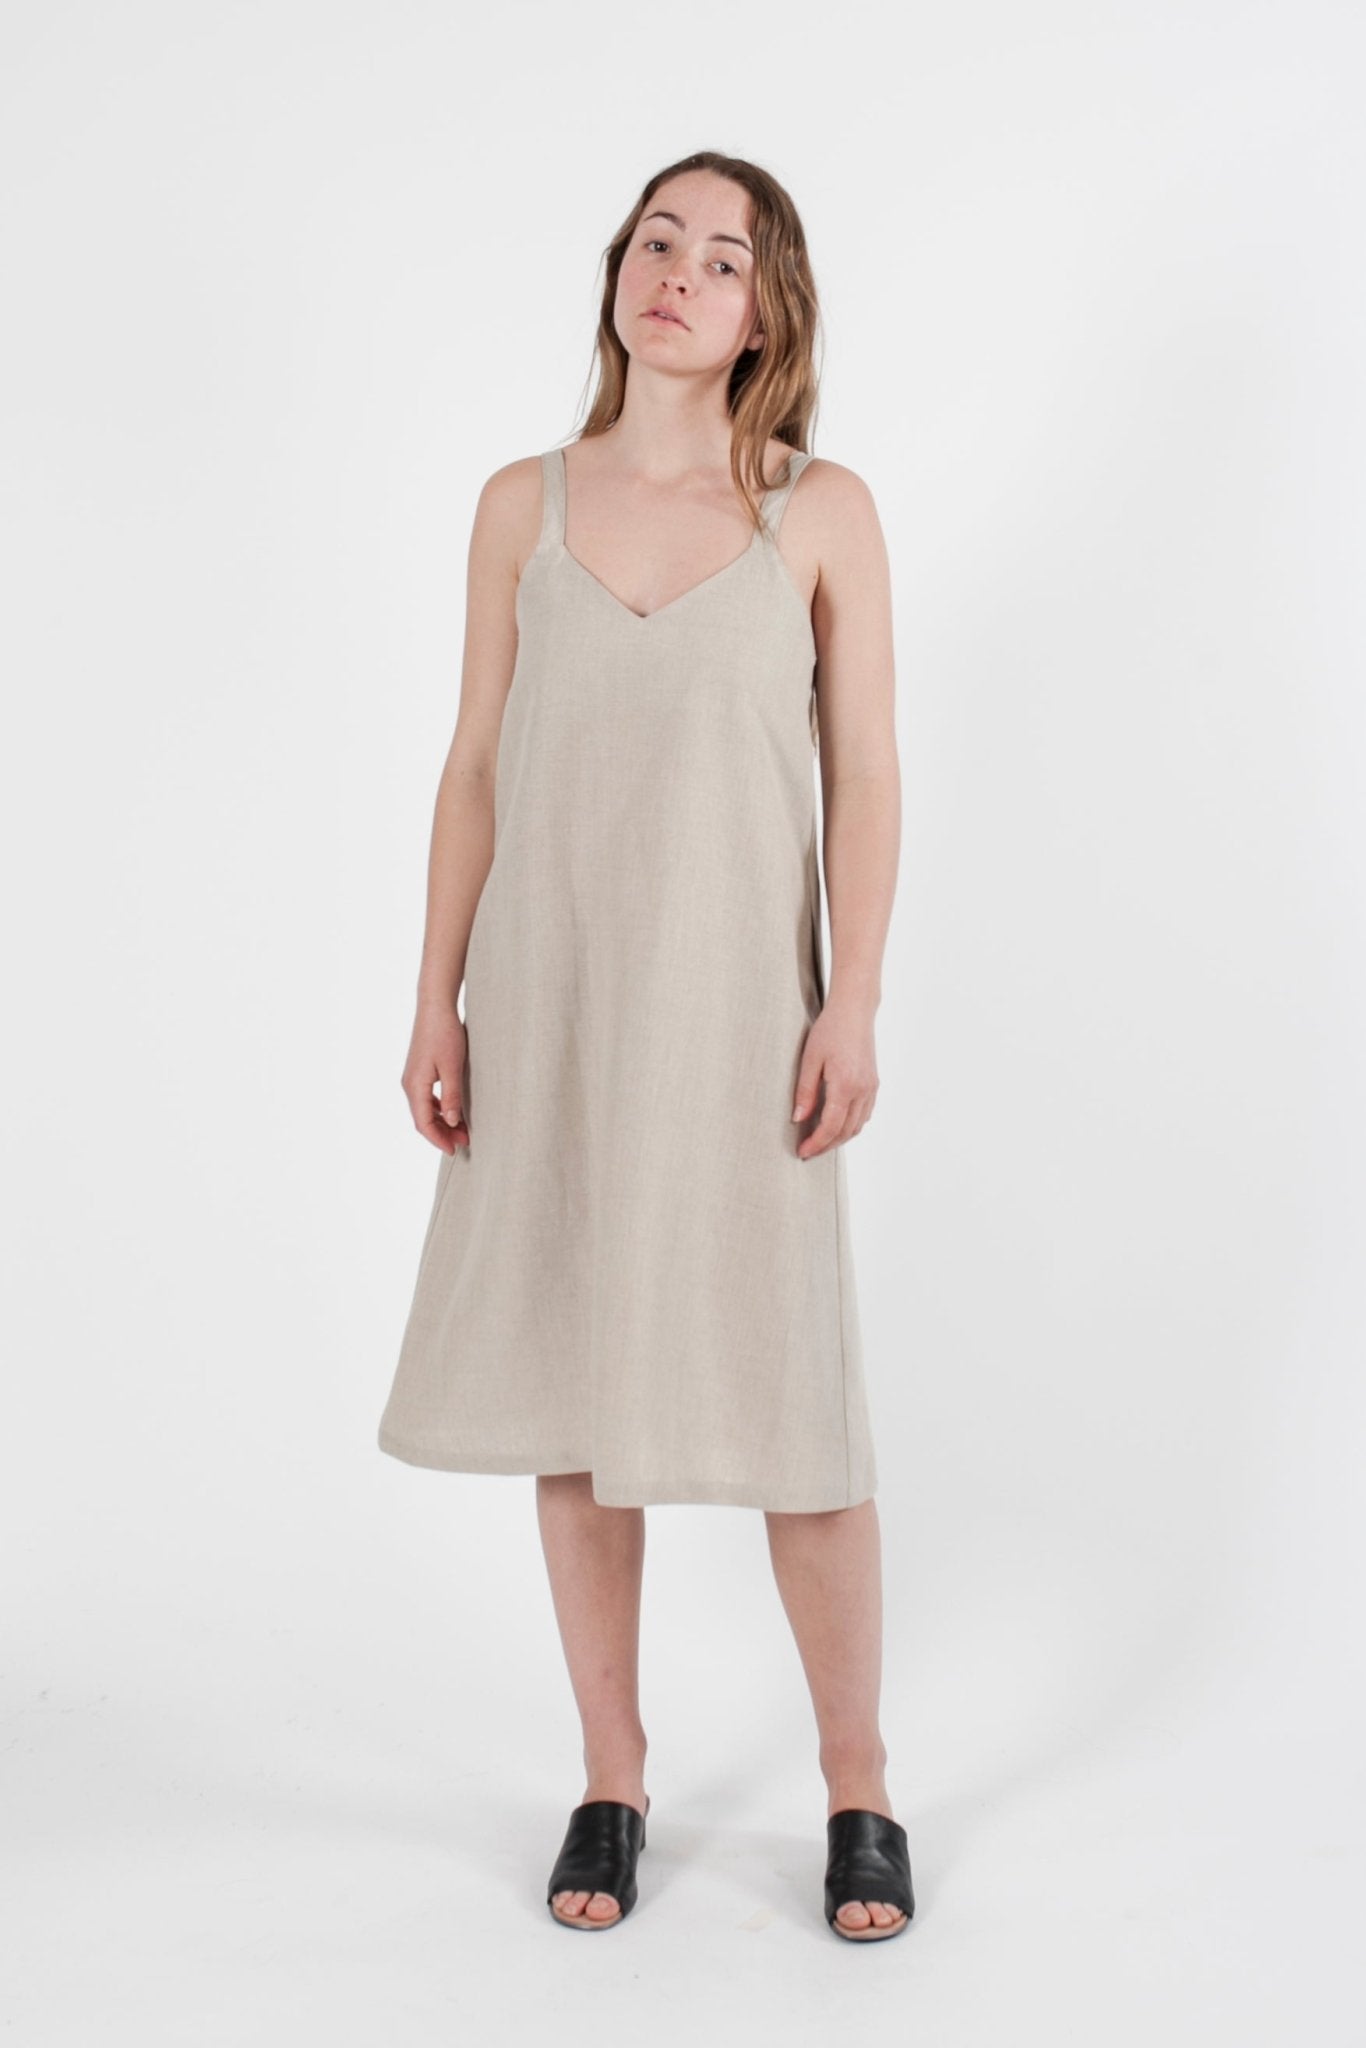 Hemp Linen Reversible Dress - Ensemble Studios